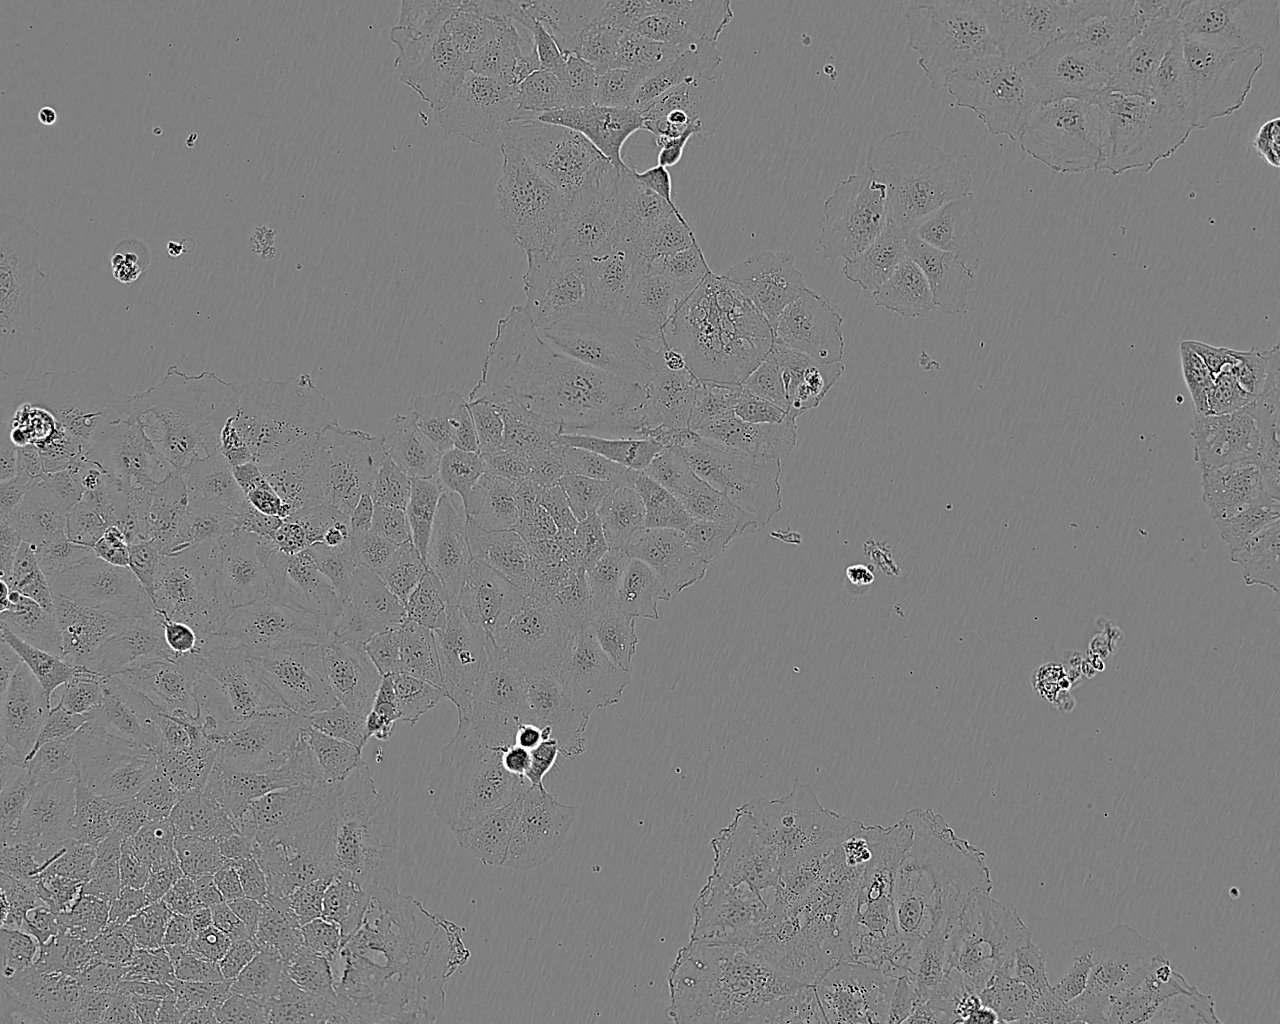 Hs 578Bst epithelioid cells人正常乳腺细胞系